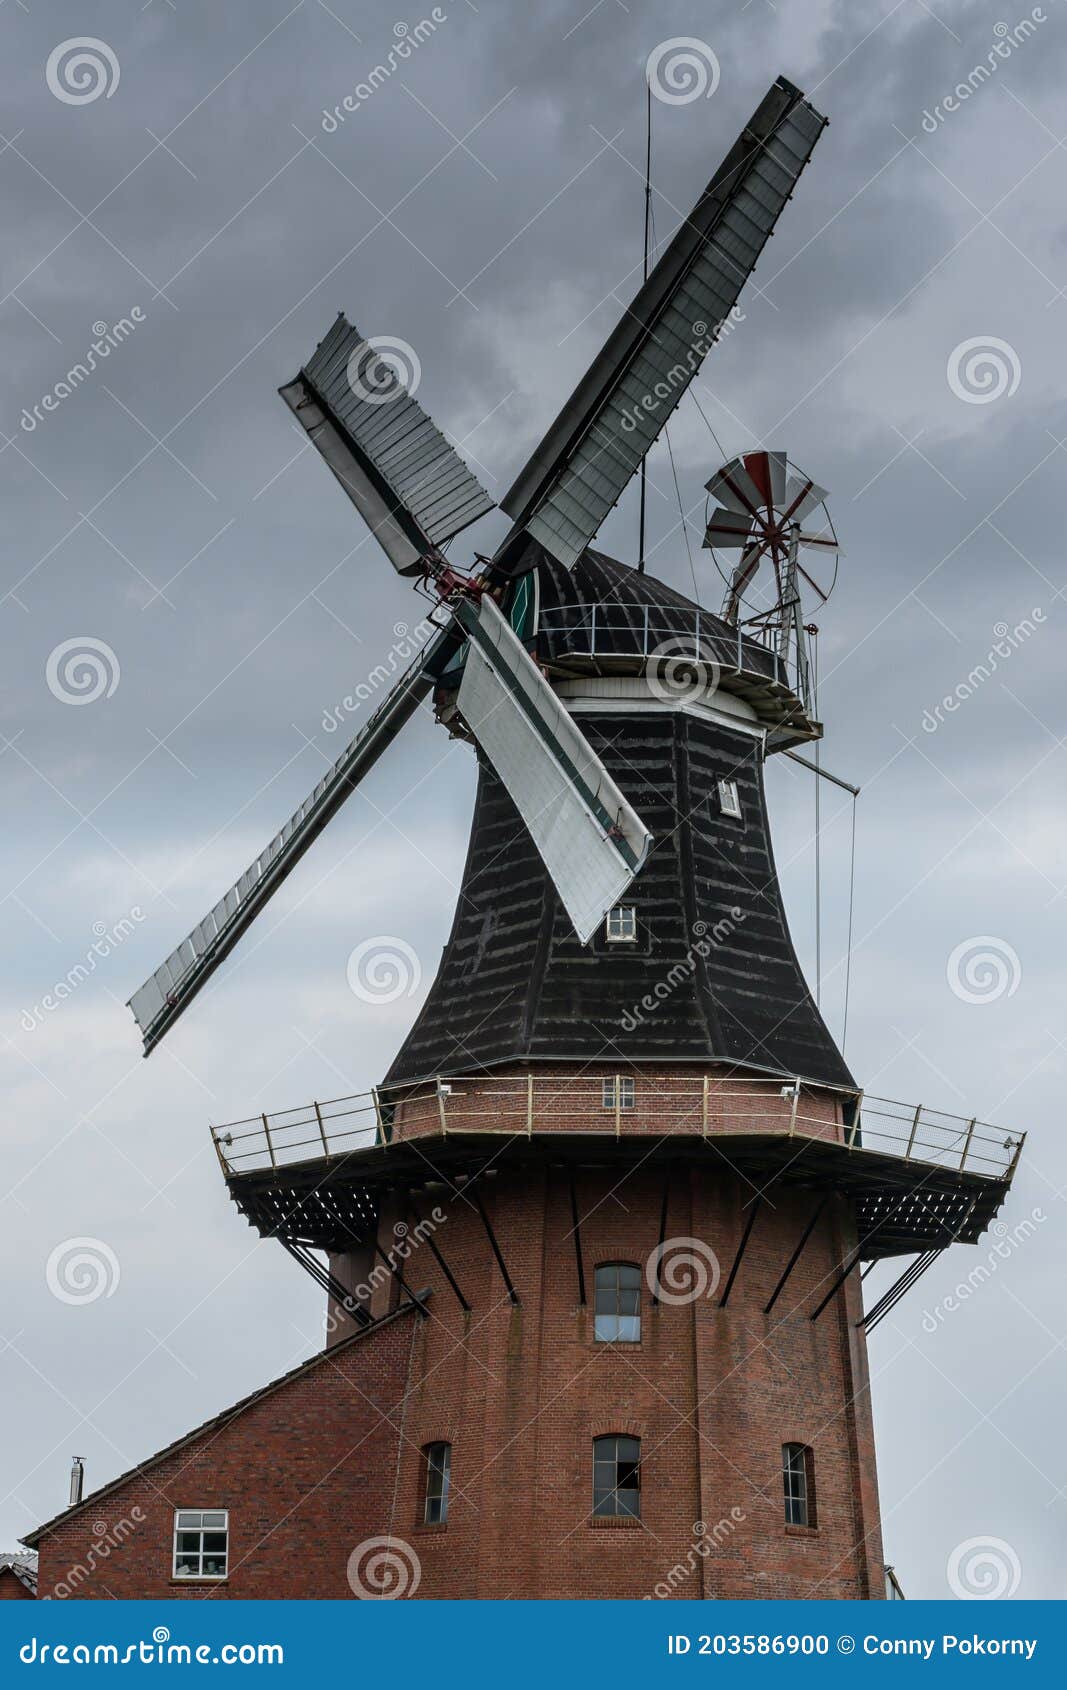 bunder mill, bunde, rheiderland, east frisia, lower saxony, germany